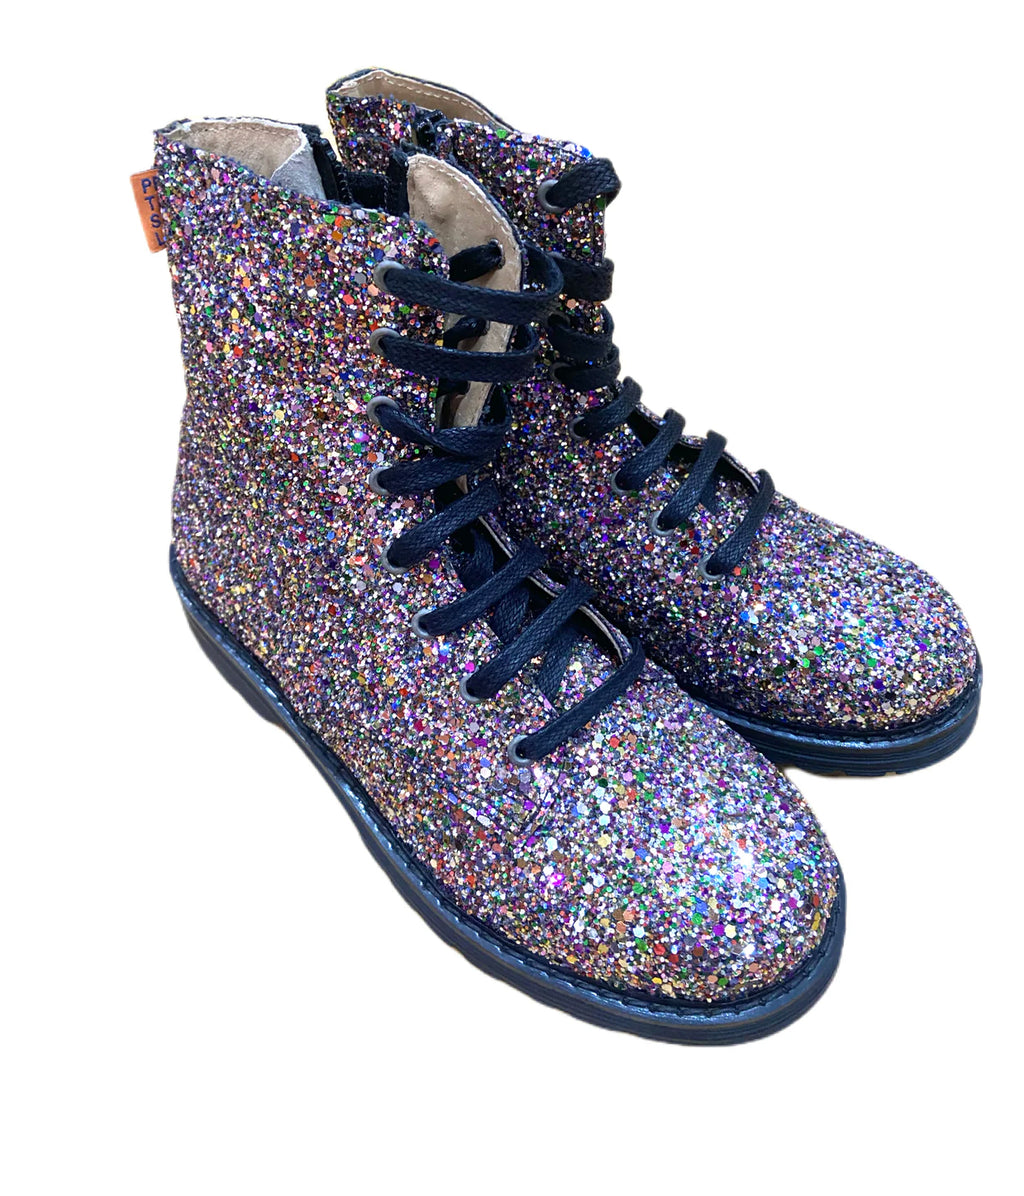 Petasil clive multi glitter boot - Elves & the Shoemaker